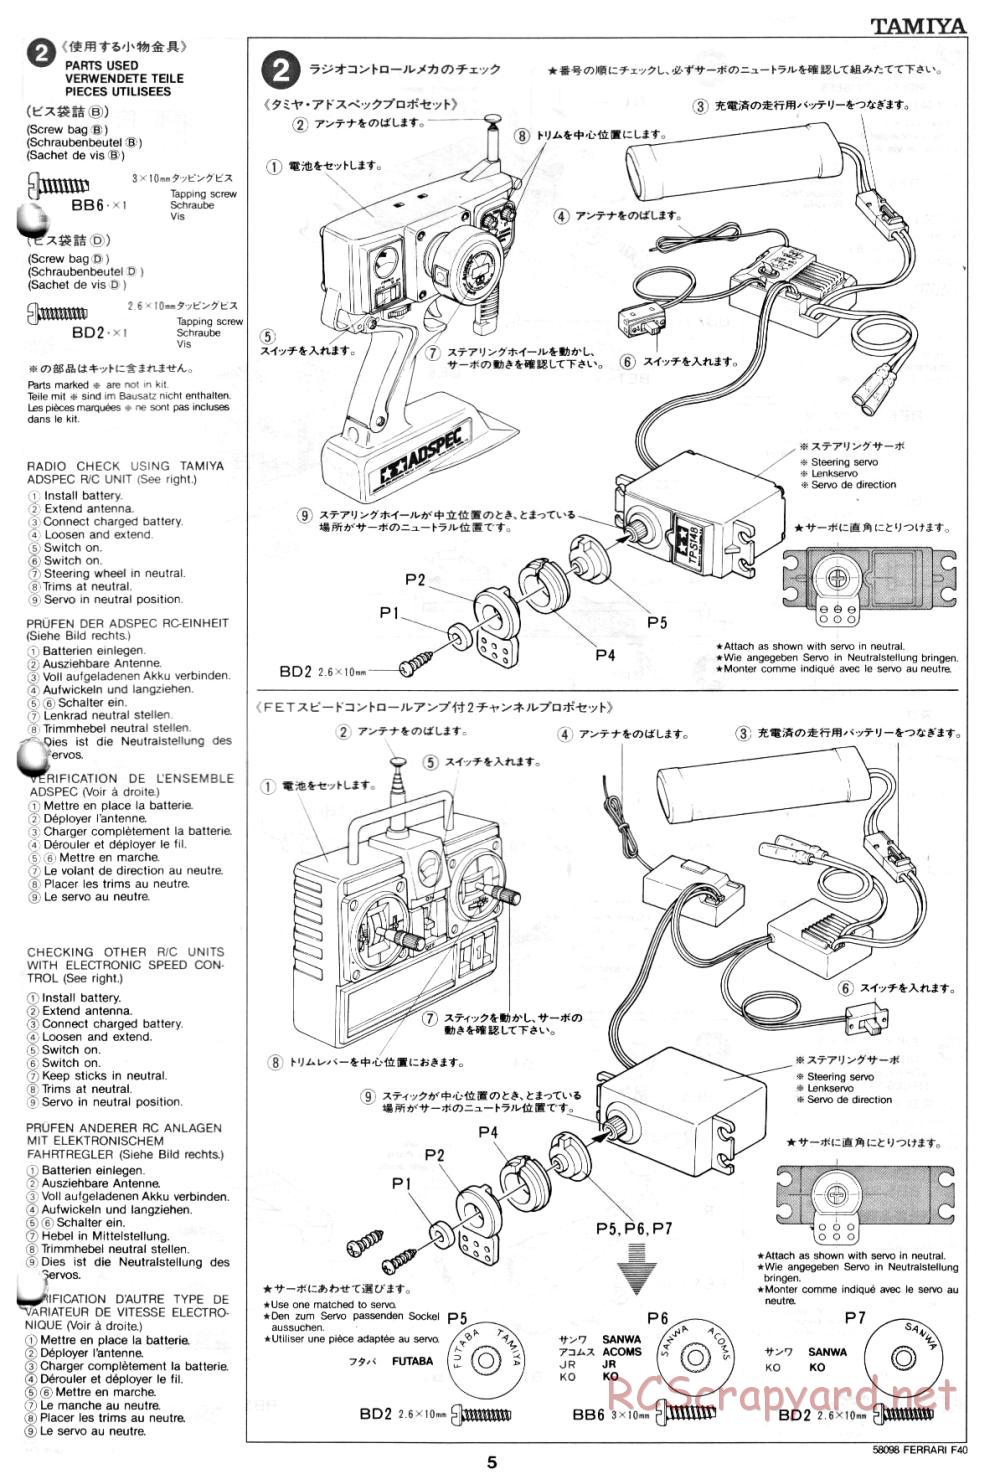 Tamiya - Ferrari F40 - 58098 - Manual - Page 5